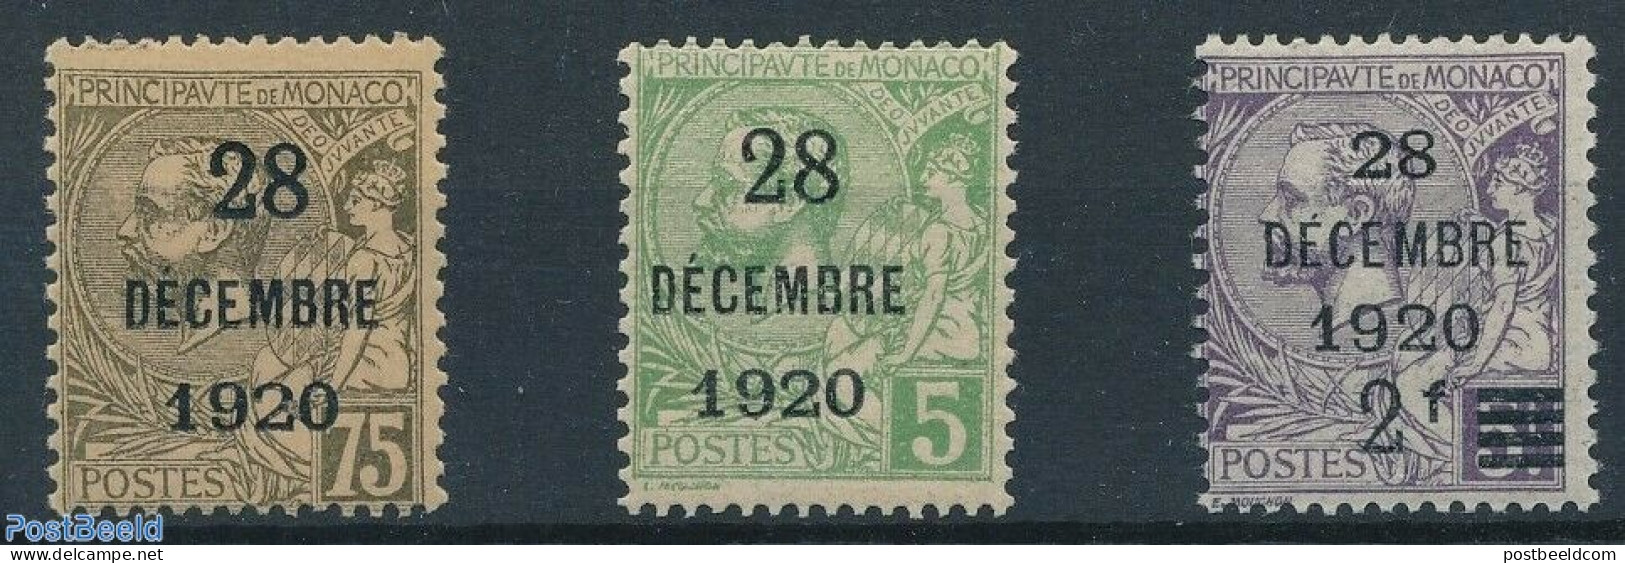 Monaco 1921 28 DEC 1920 Overprints 3v, Unused (hinged) - Ongebruikt